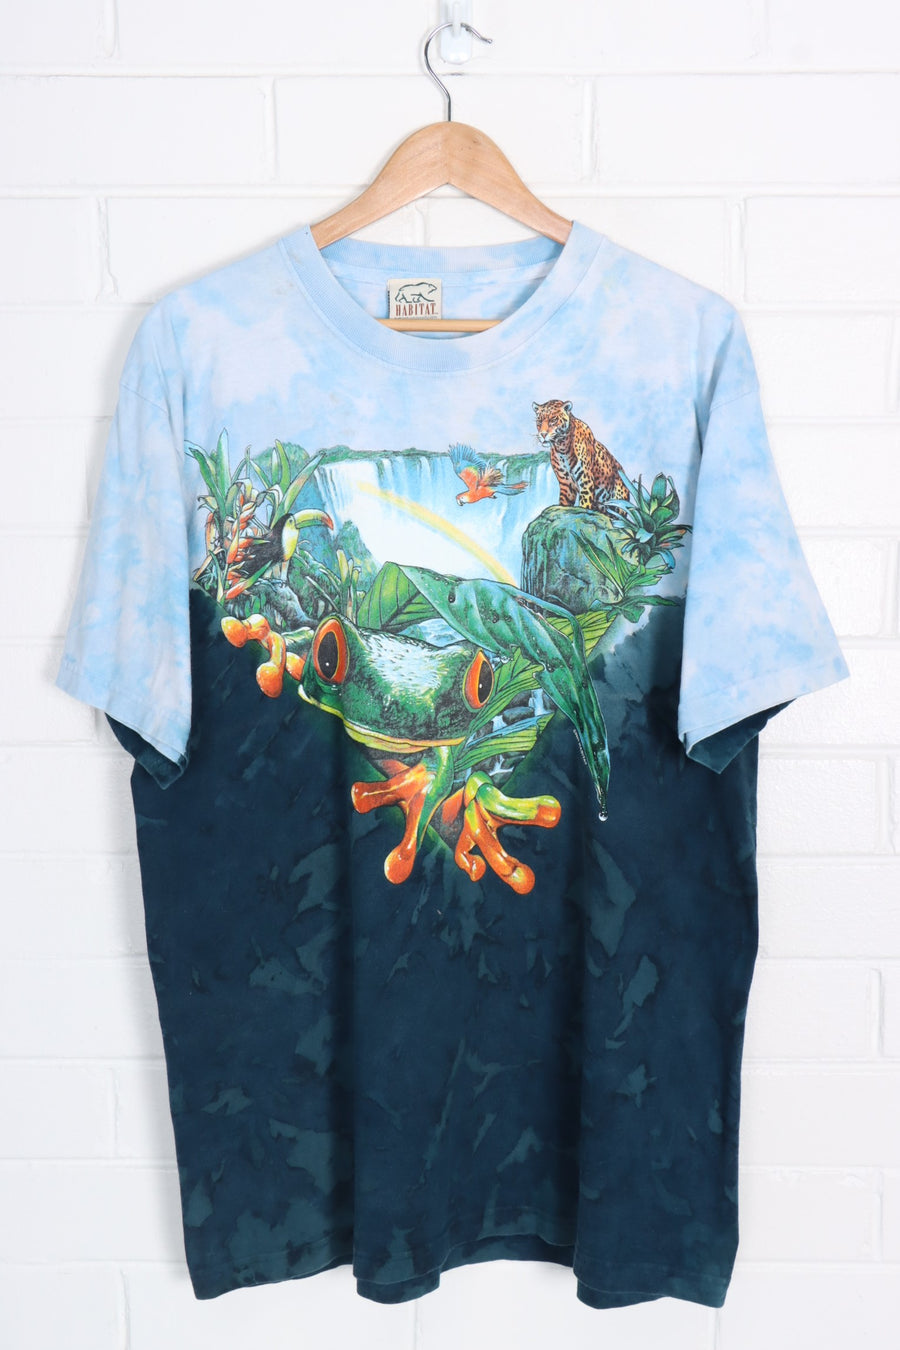 HABITAT Rainforest Frog & Animal Tie-Dye T-Shirt (XL)